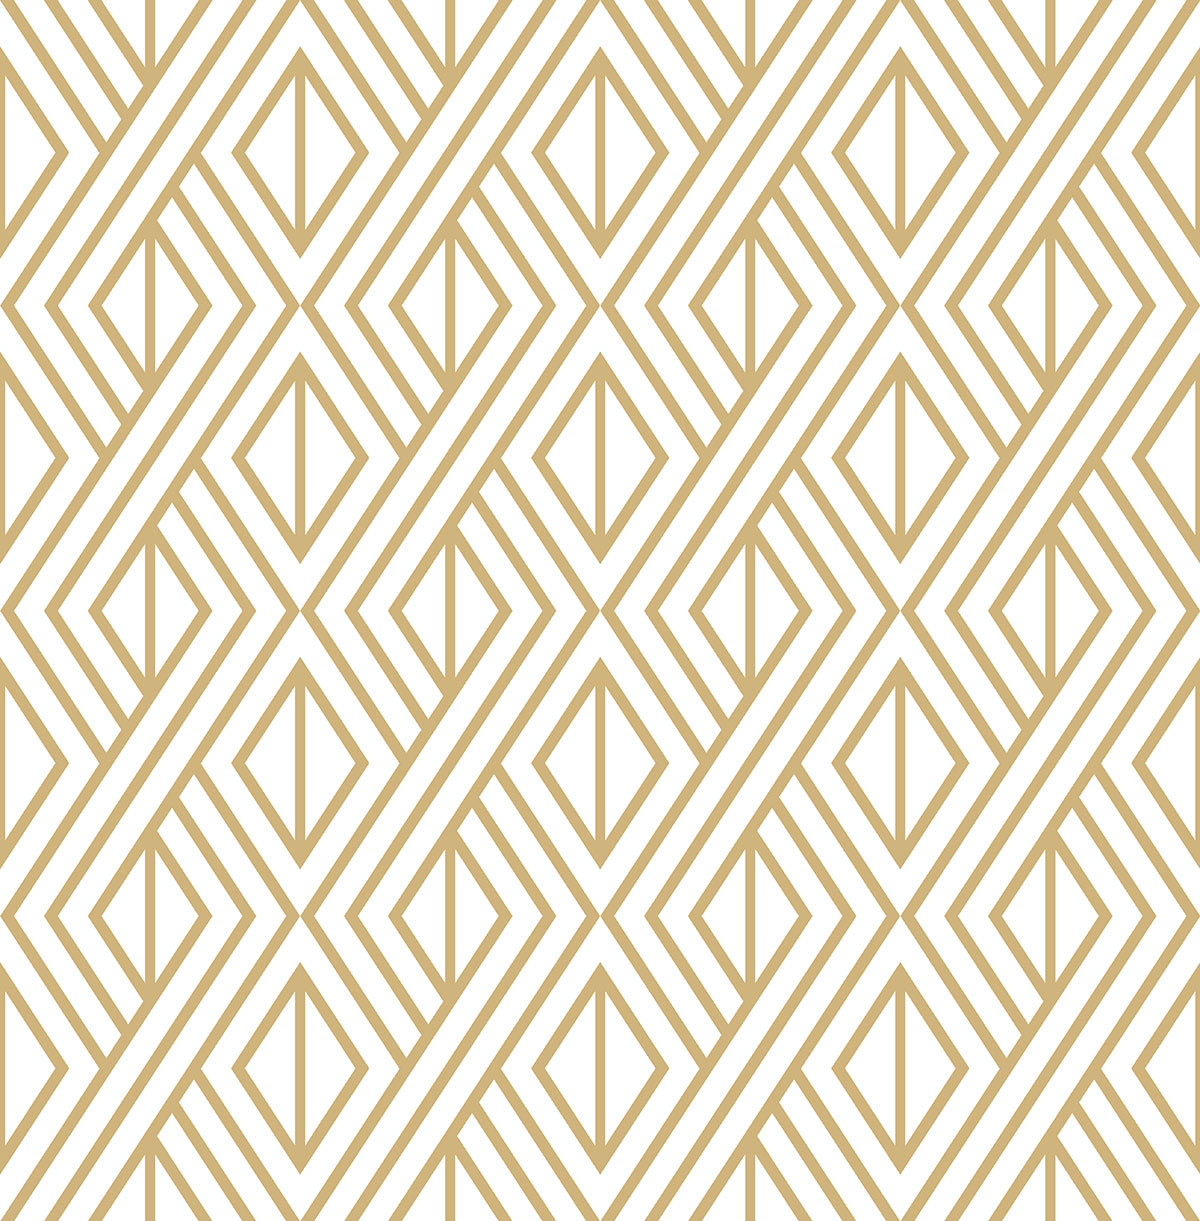 NextWall Diamond Geometric Peel & Stick Wallpaper - Gold